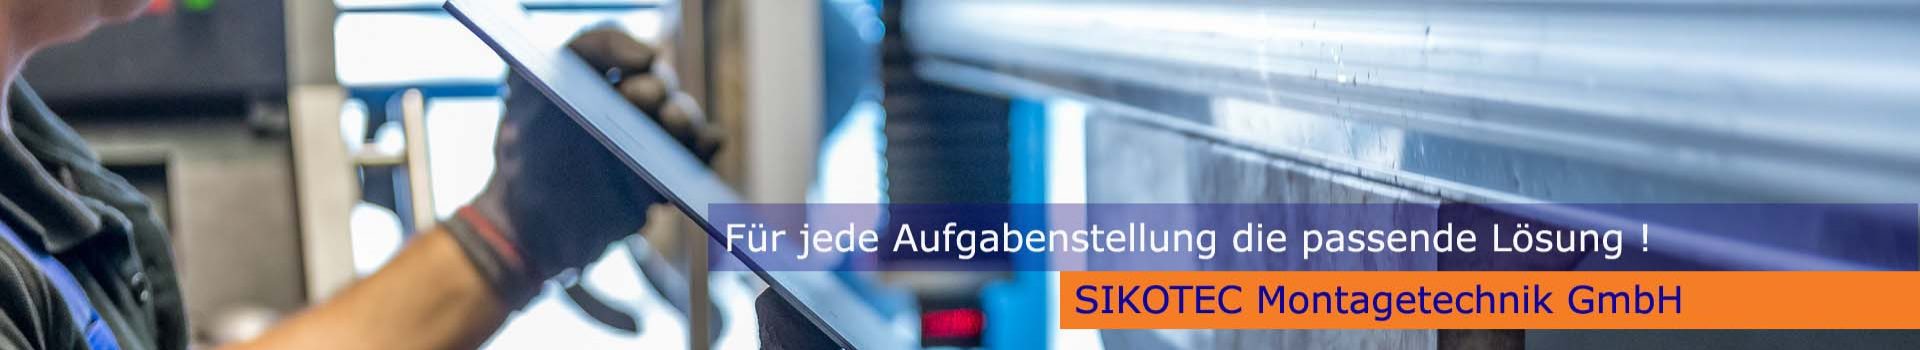 Sikotec Montagetechnik GmbH